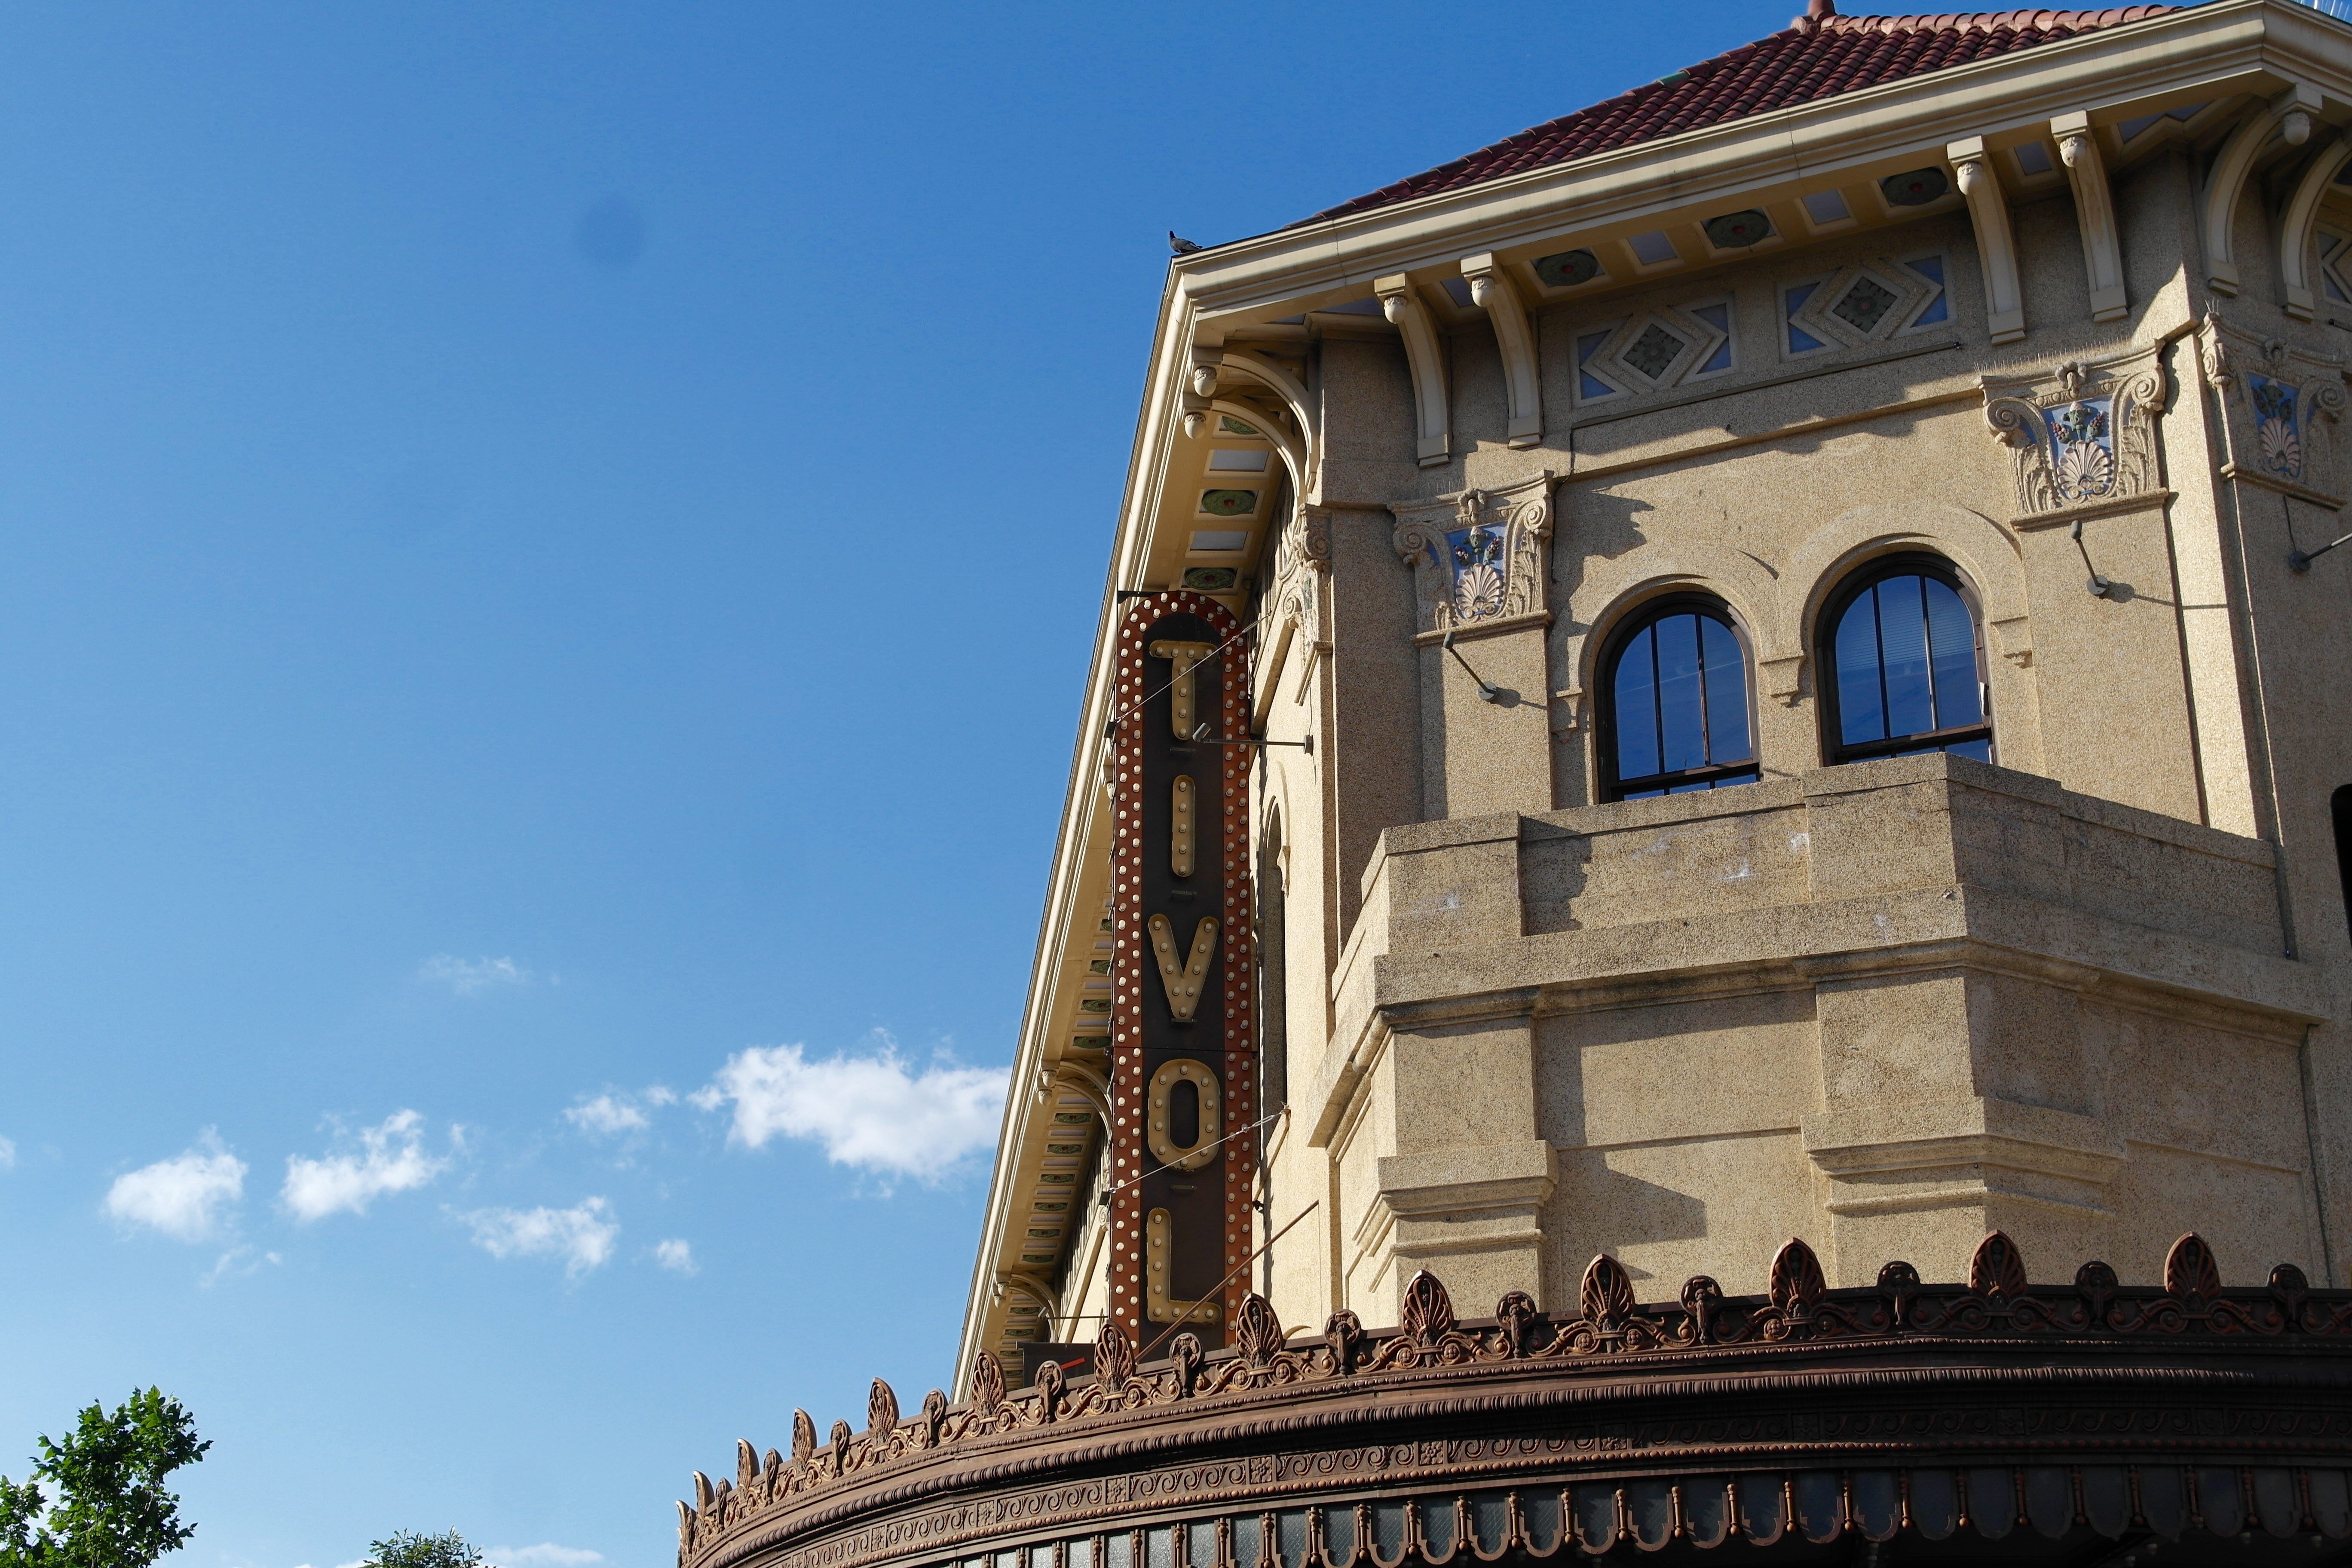 Historic Tivoli Theater building